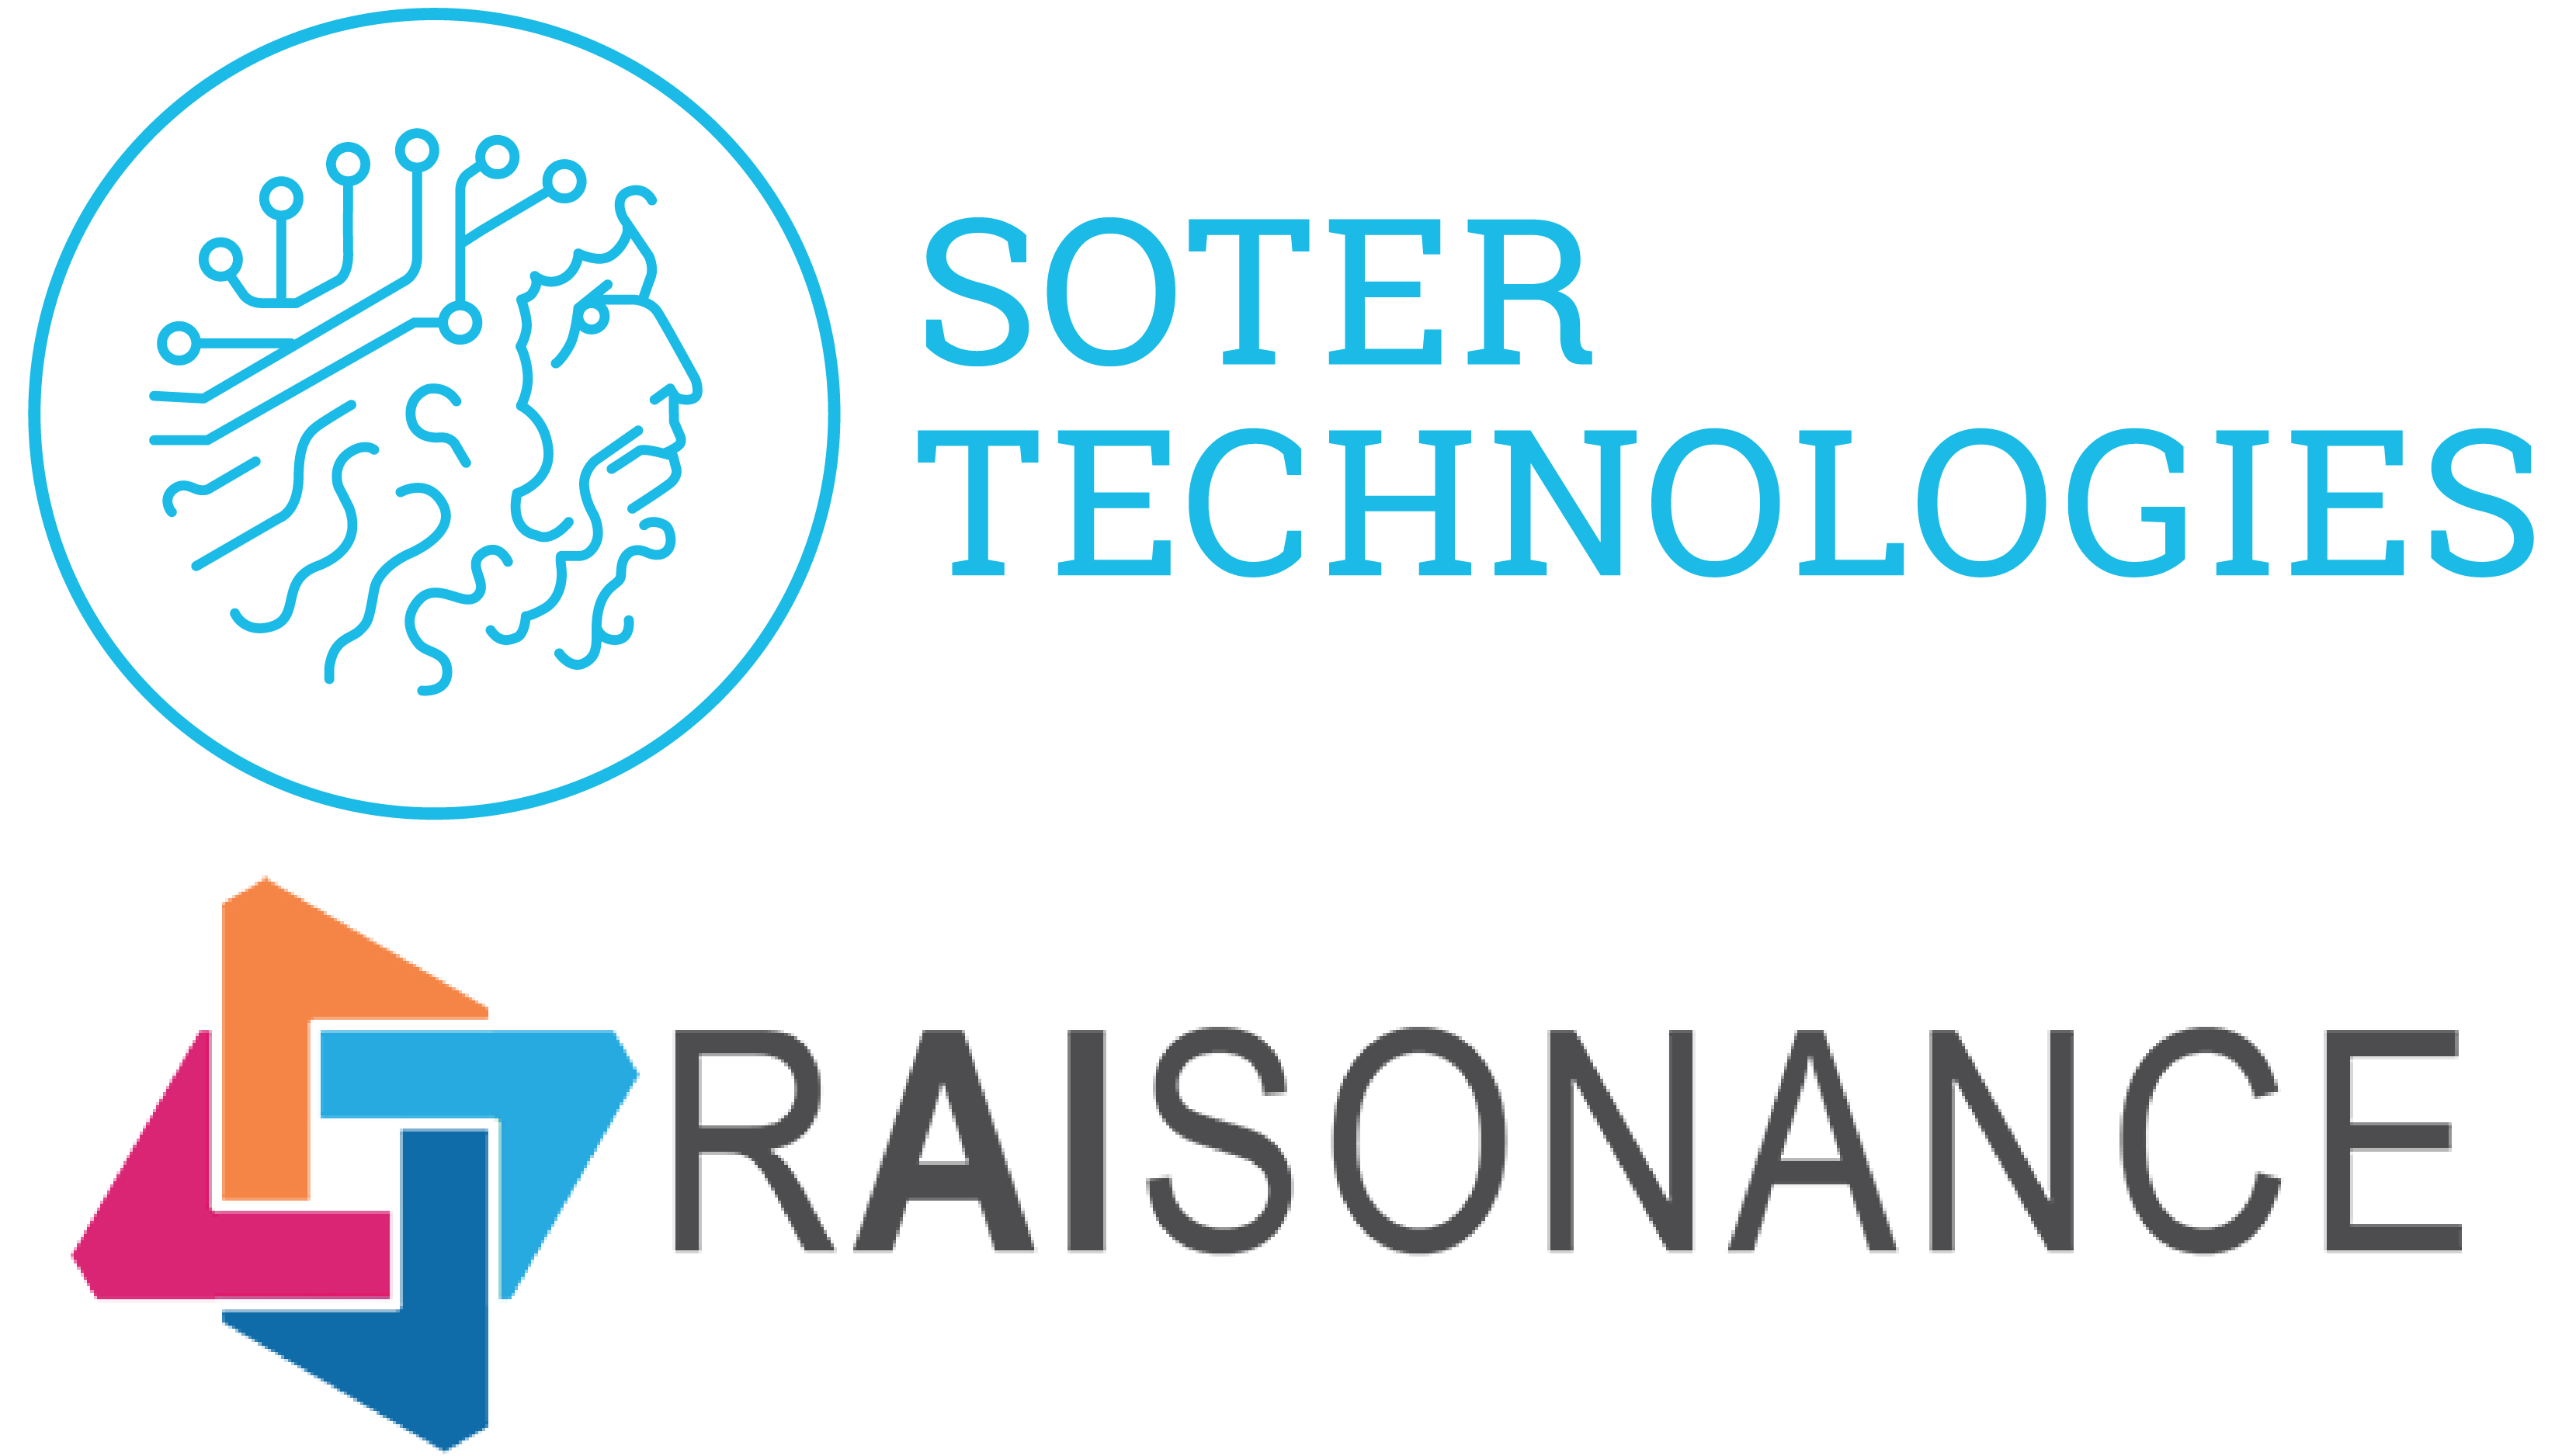 Soter technologies and RAIsonance